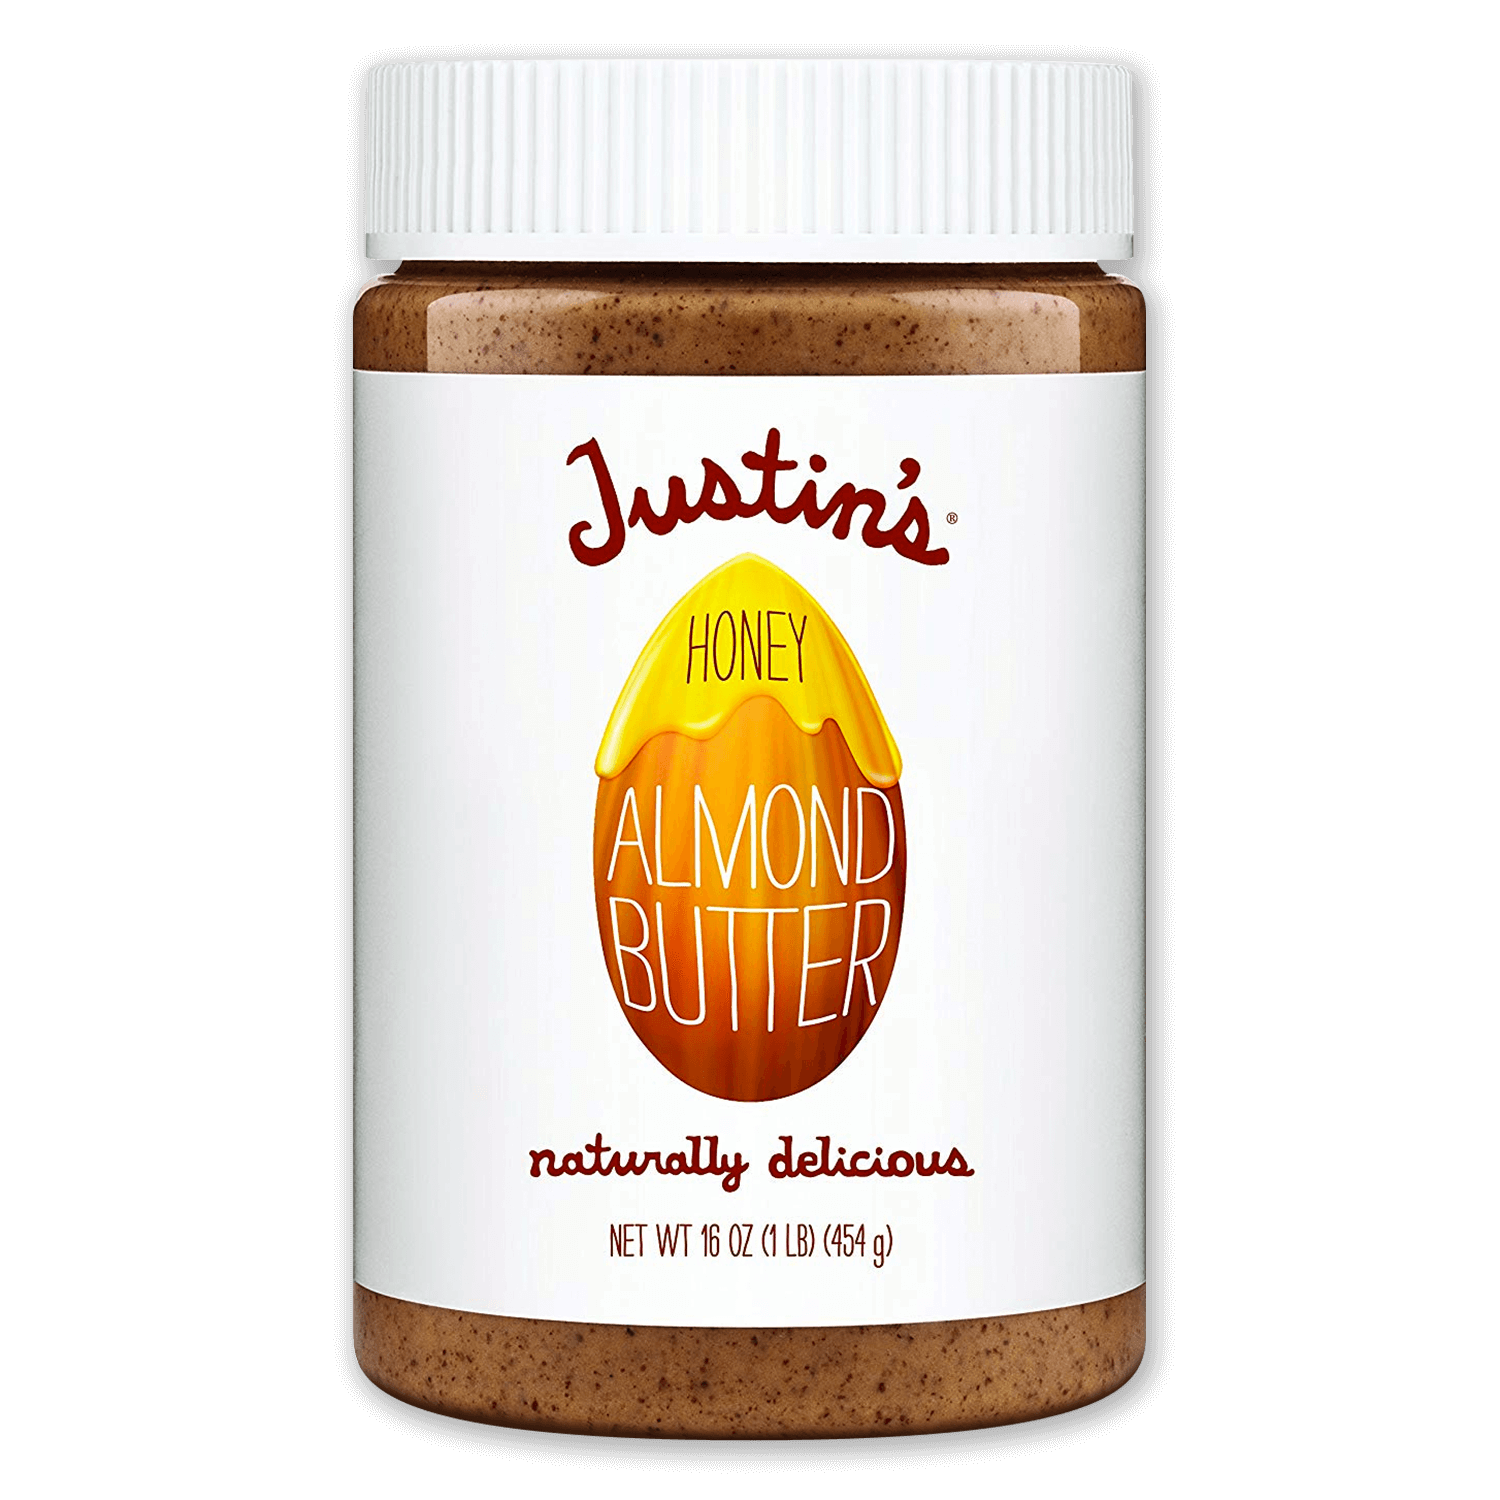 Justin's Honey Almond Butter Spread jar 16 oz.